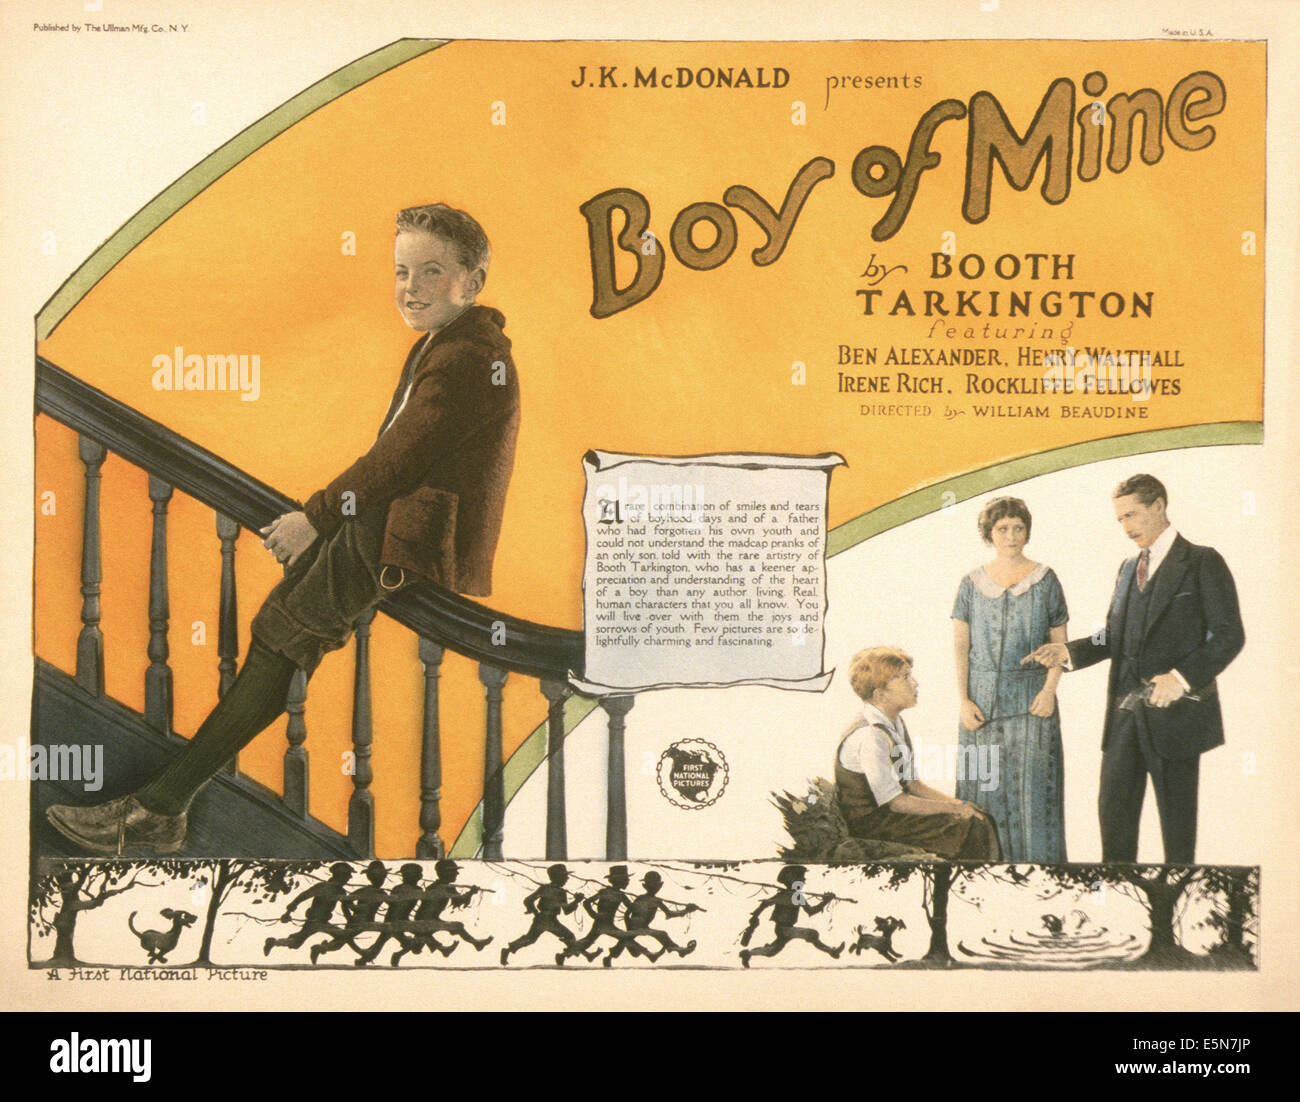 BOY OF MINE, Ben Alexander (on bannister), right from left: Ben Alexander, Irene Rich, Henry B. Walthall, 1923 Stock Photo